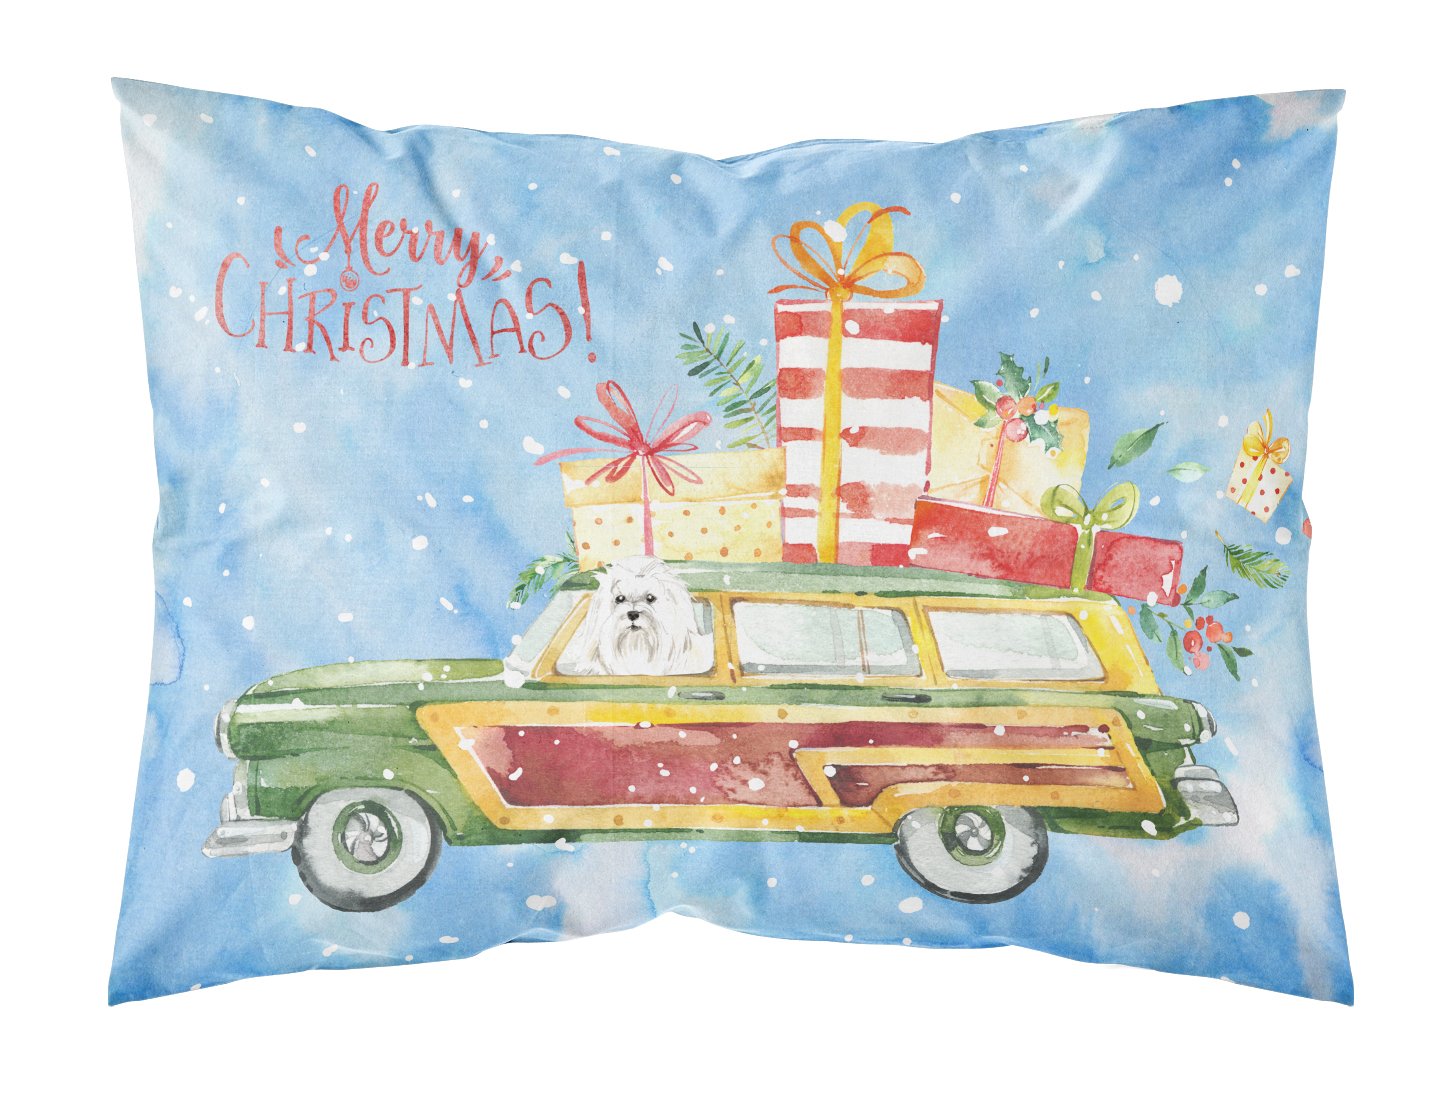 Merry Christmas Maltese Fabric Standard Pillowcase CK2414PILLOWCASE by Caroline's Treasures